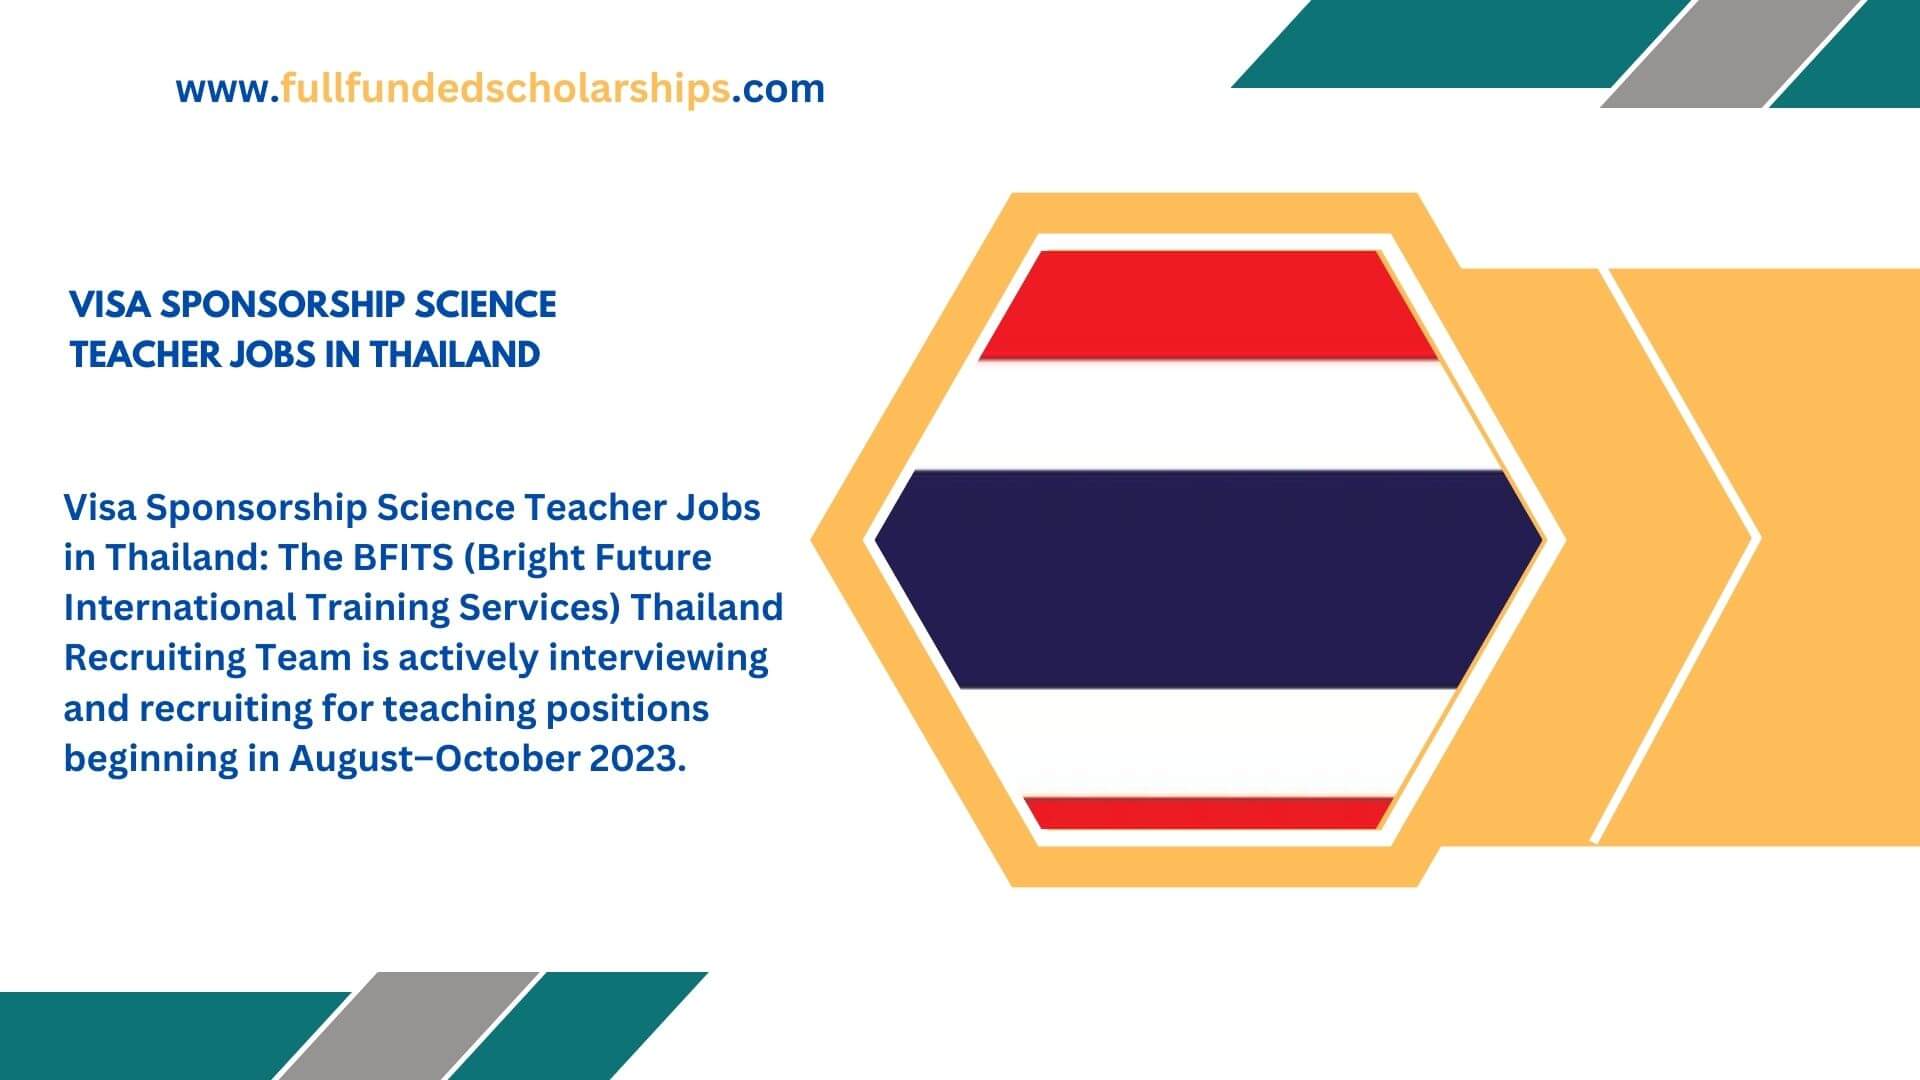 Visa Sponsorship Science Teacher Jobs in Thailand